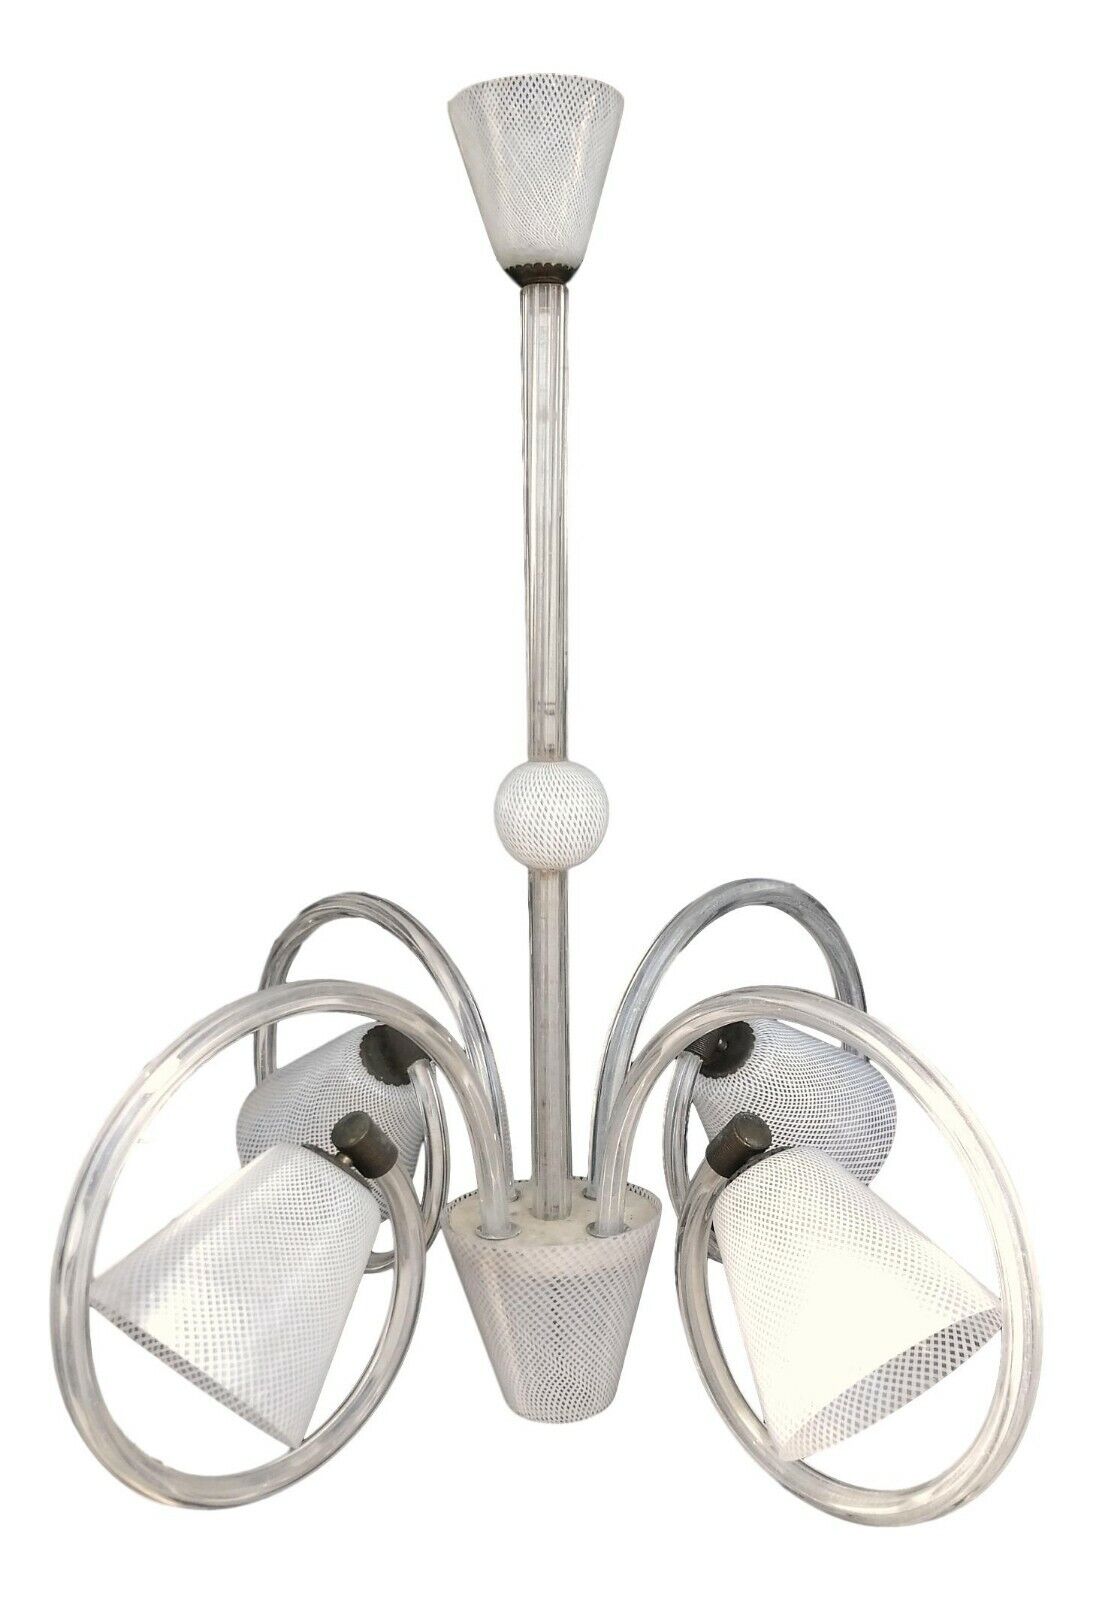 Chandelier Original venini Design carlo scarpa Glass Reticello Vintage Years 50